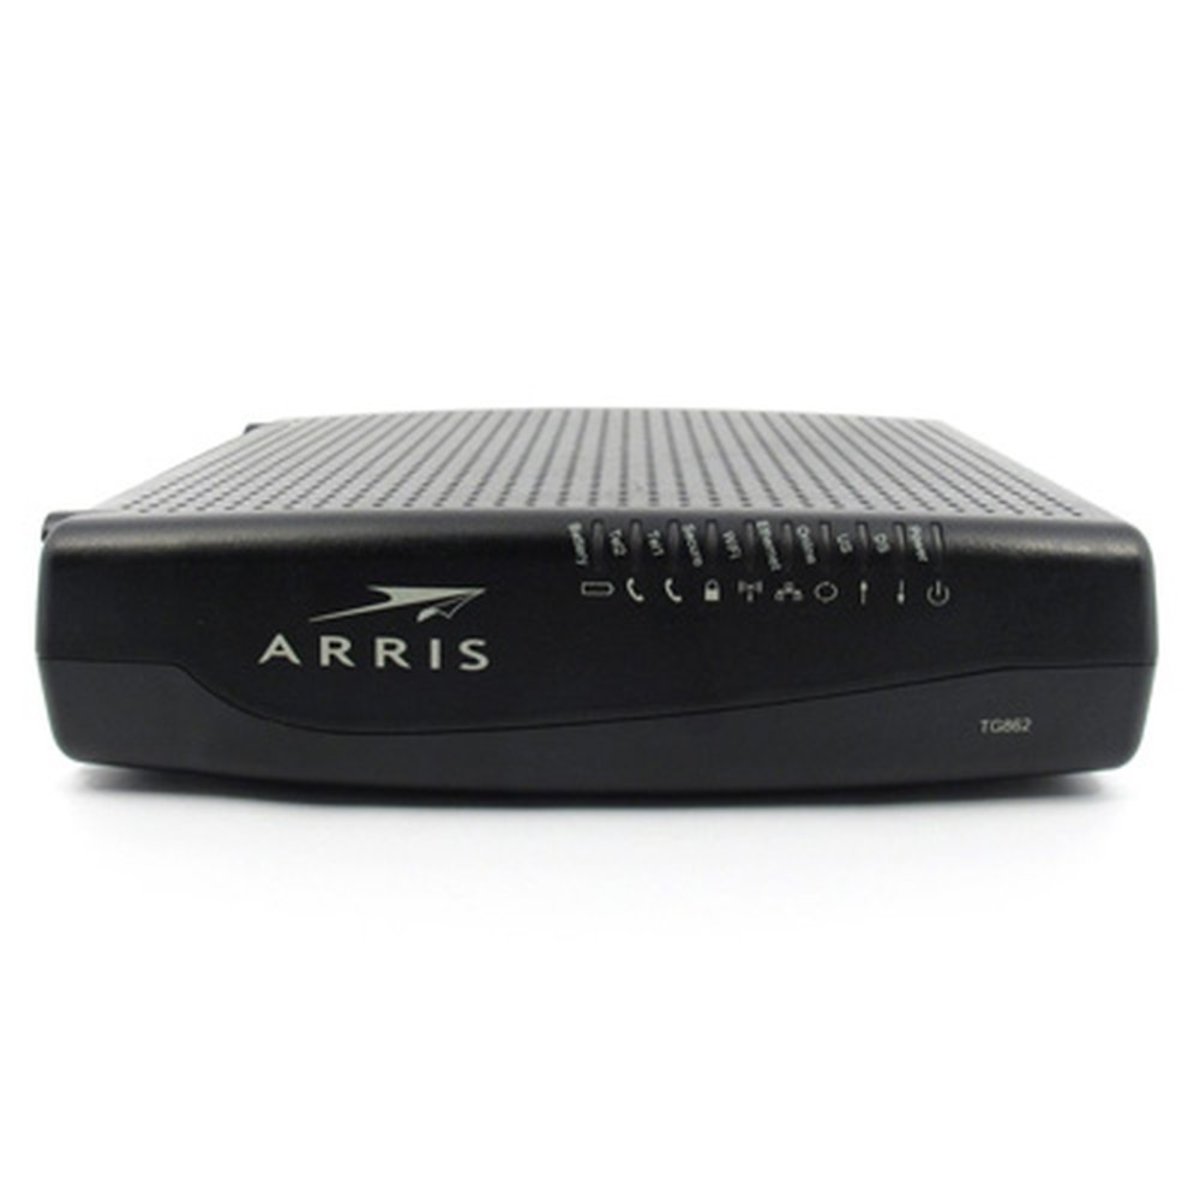 New Arris 12hr Battery Backup TM722 TM822G TG852 TG862 TG1682 with Xfinity X1 